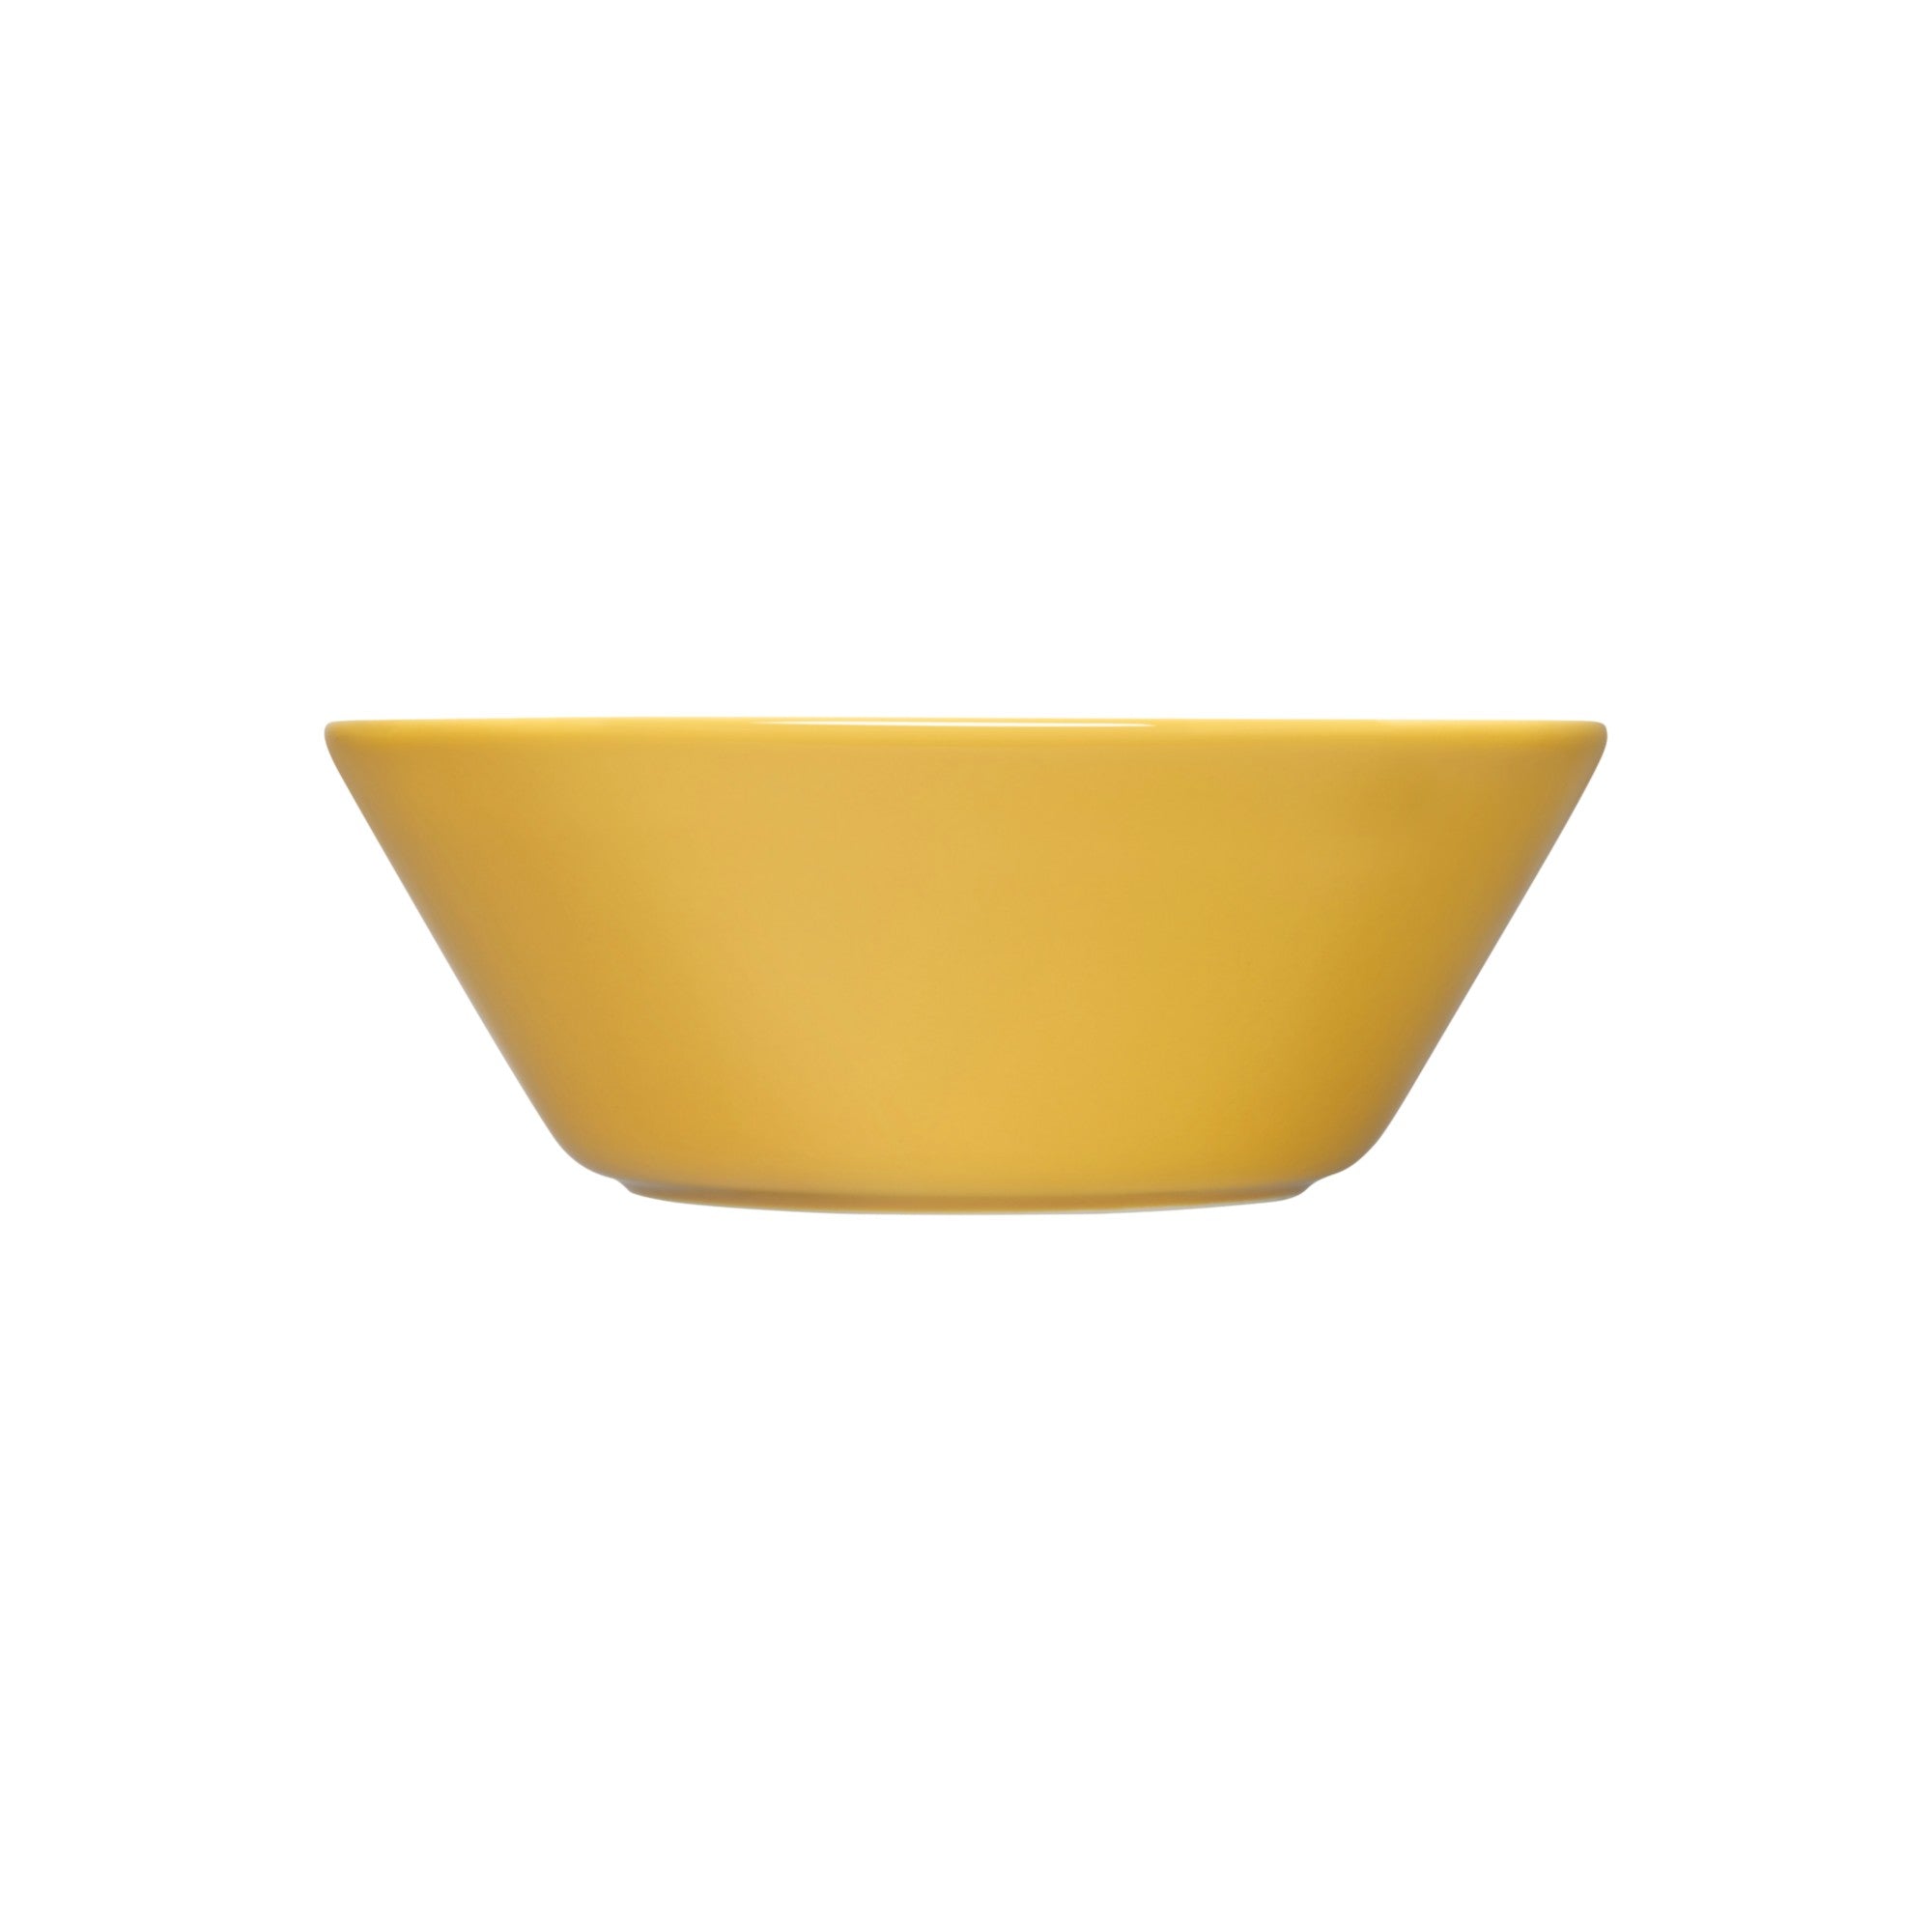 Teema bowl 15 cm Soup cereal bowl 5.8" / 16oz